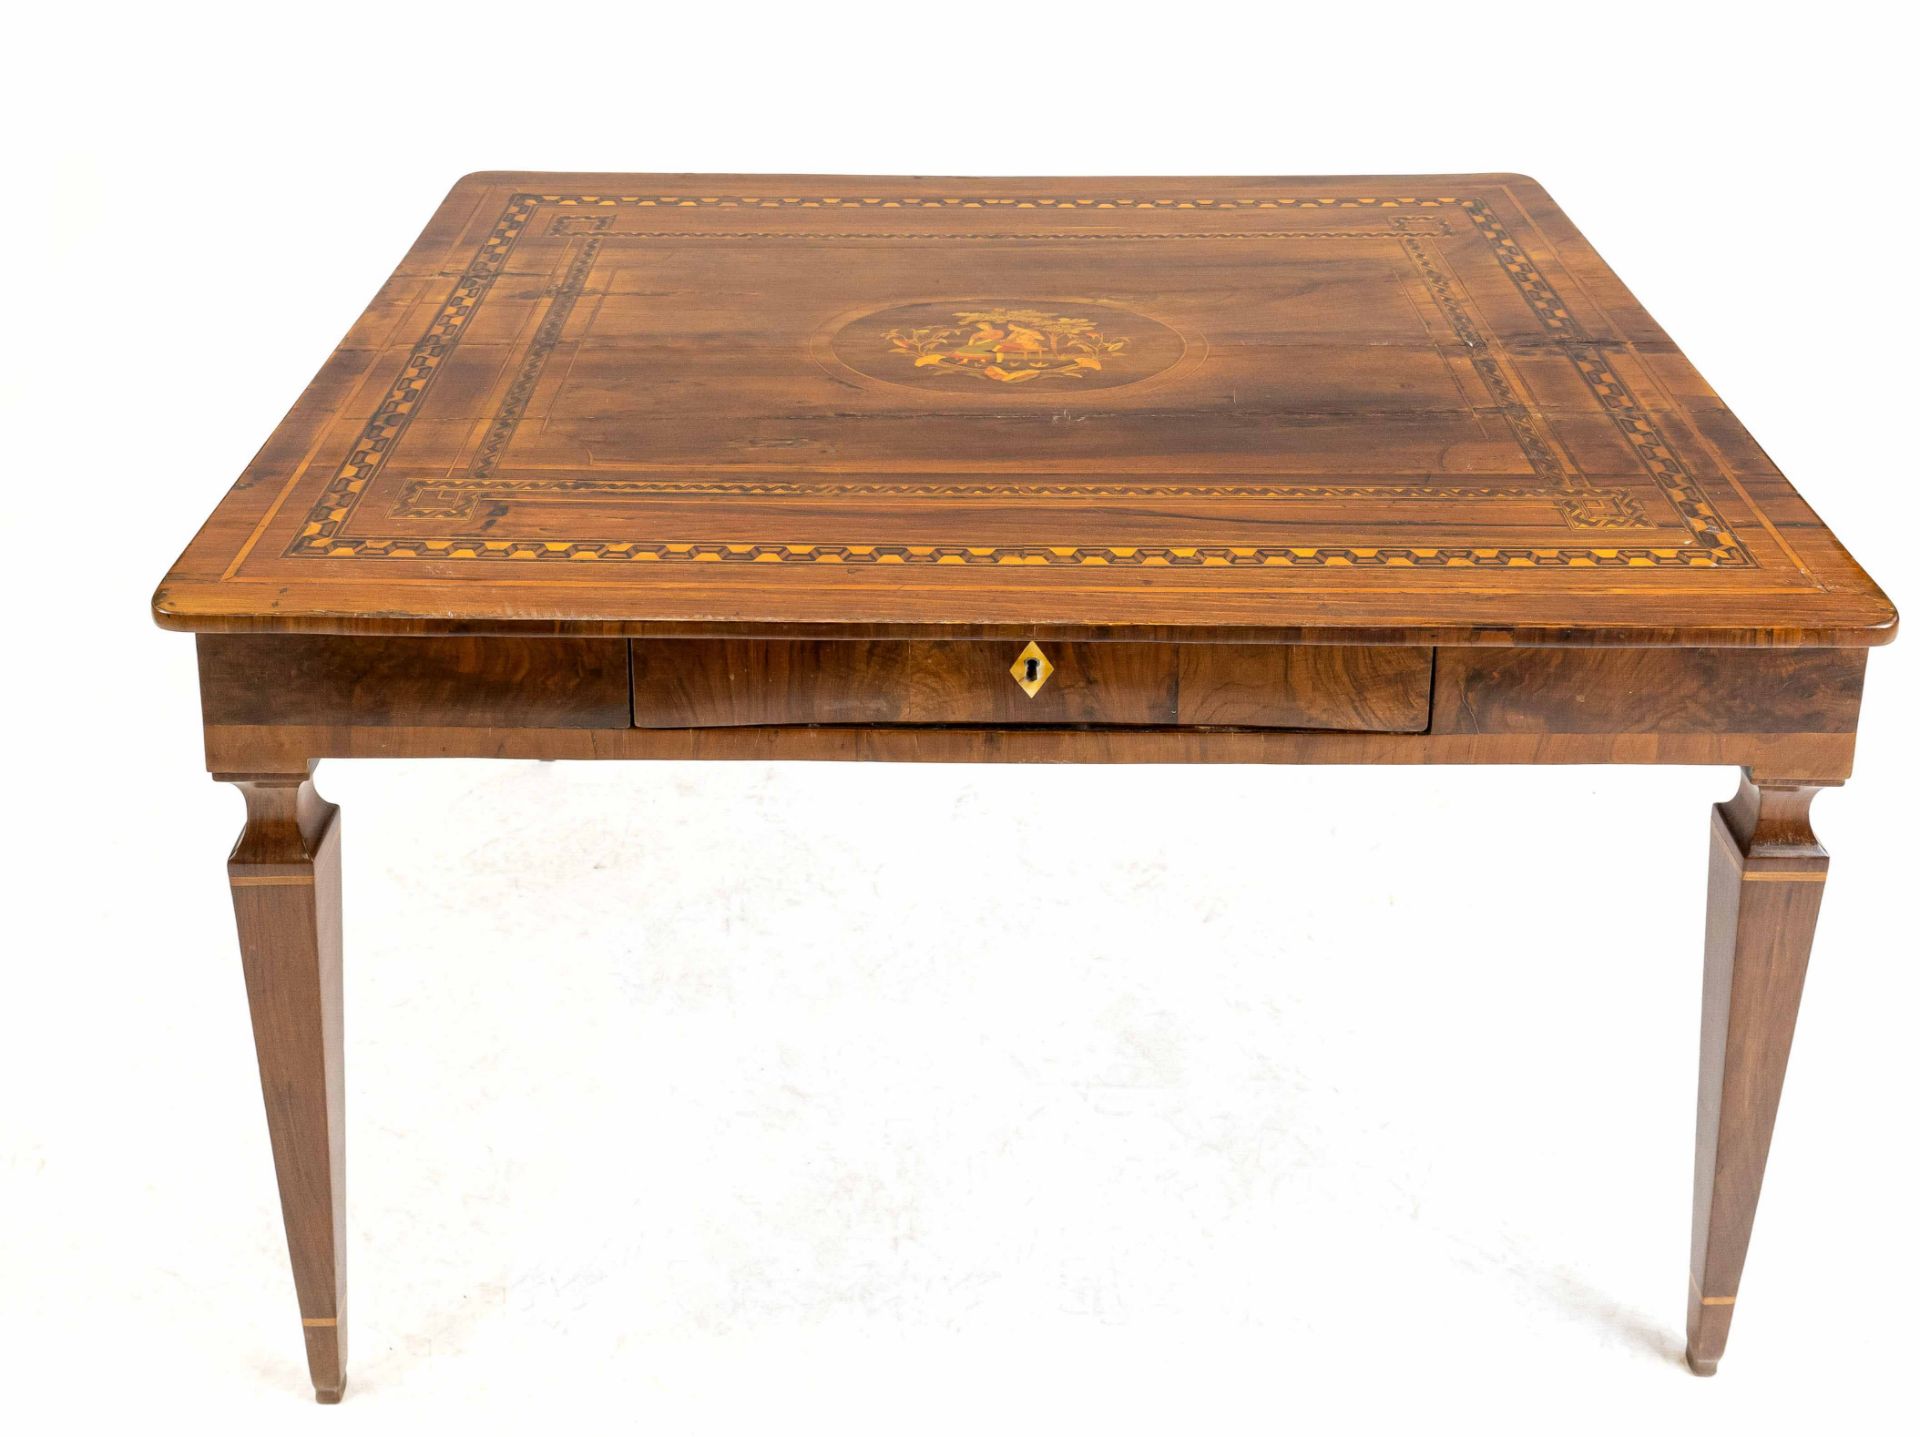 Biedermeier table circa 1820, walnut and other fine woods veneered, frame with drawer, veneer framed